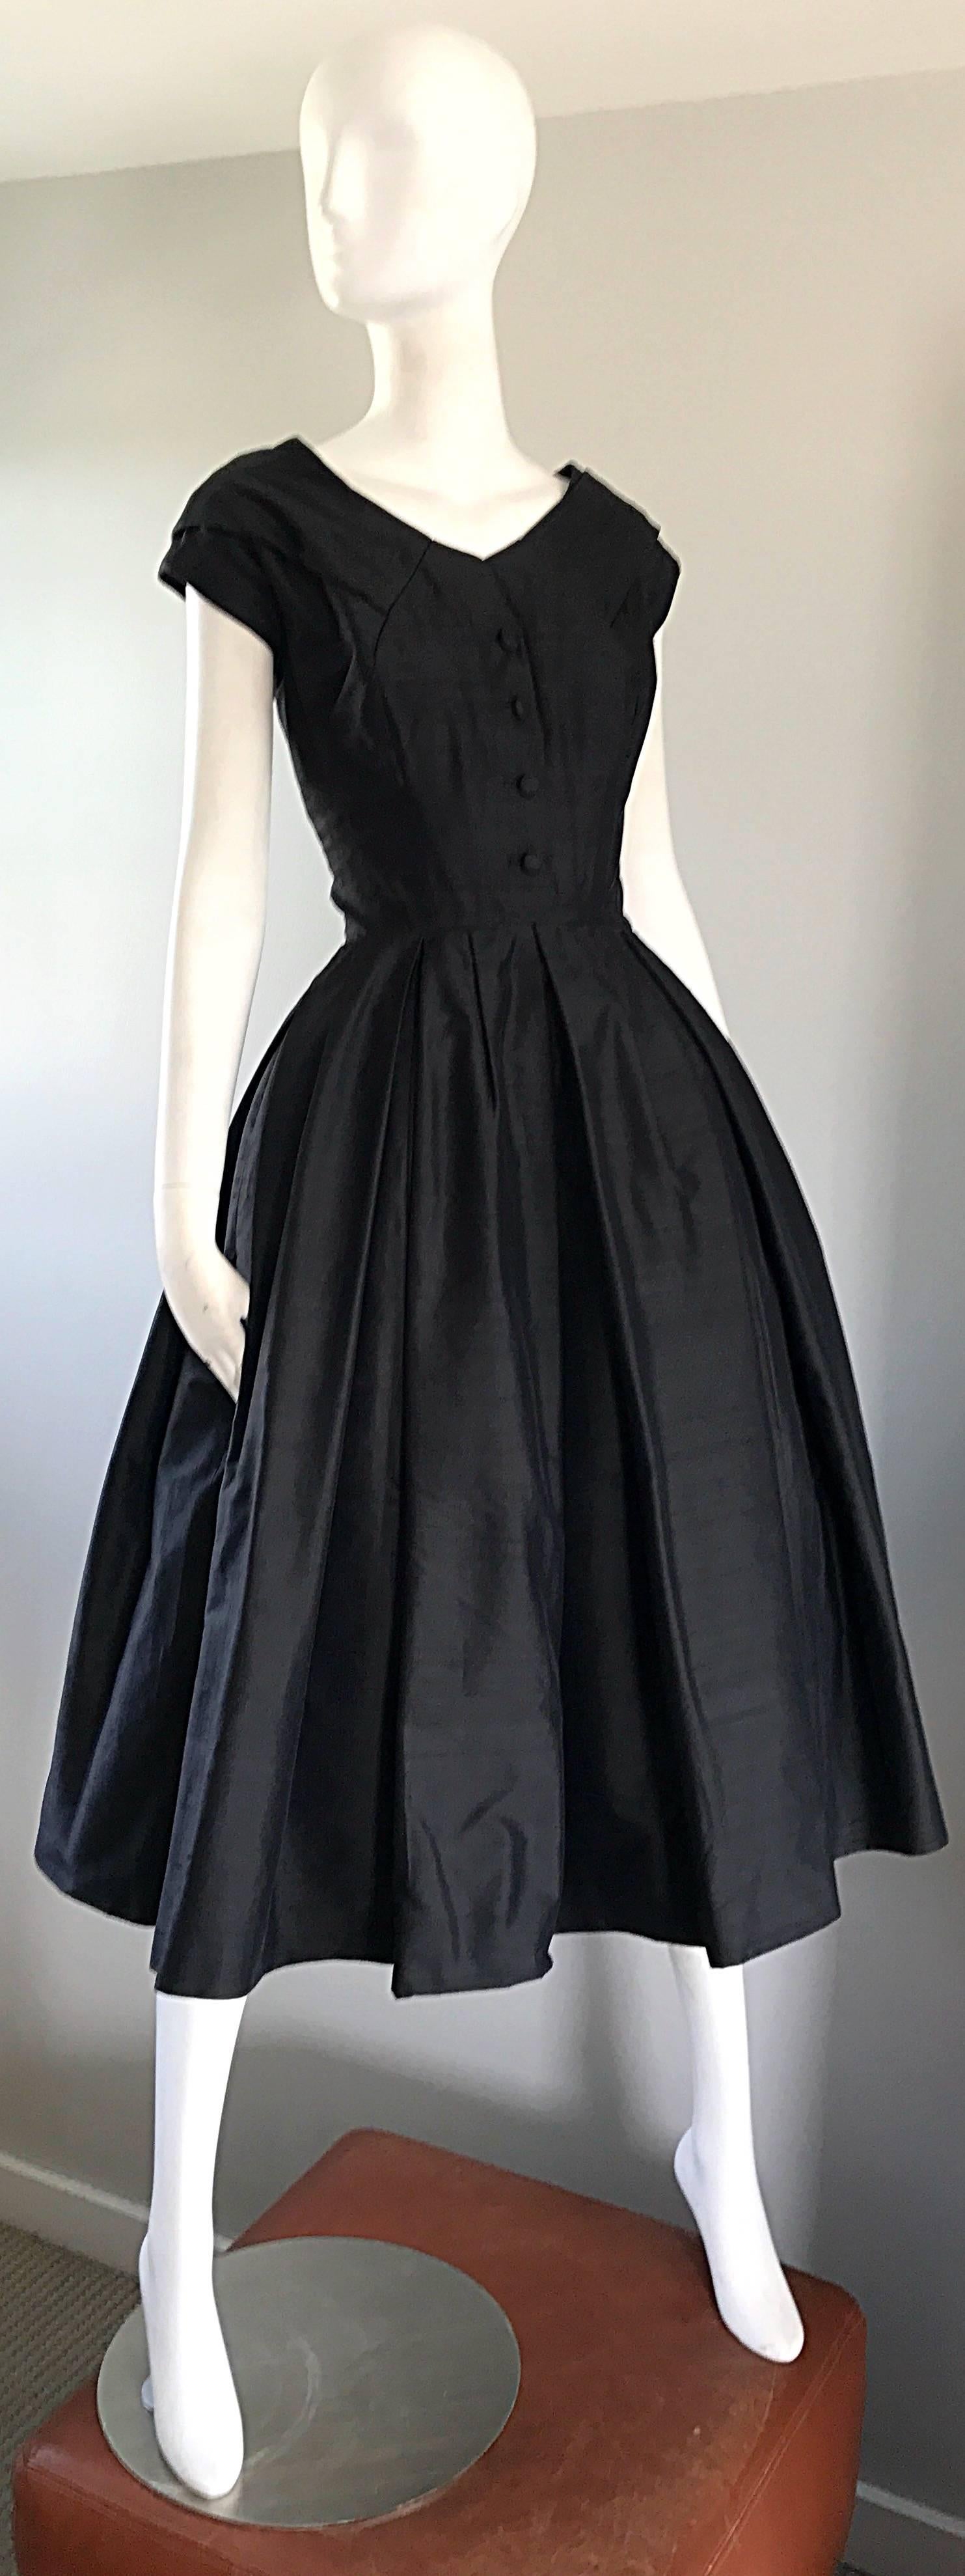 christian dior dresses 1950s